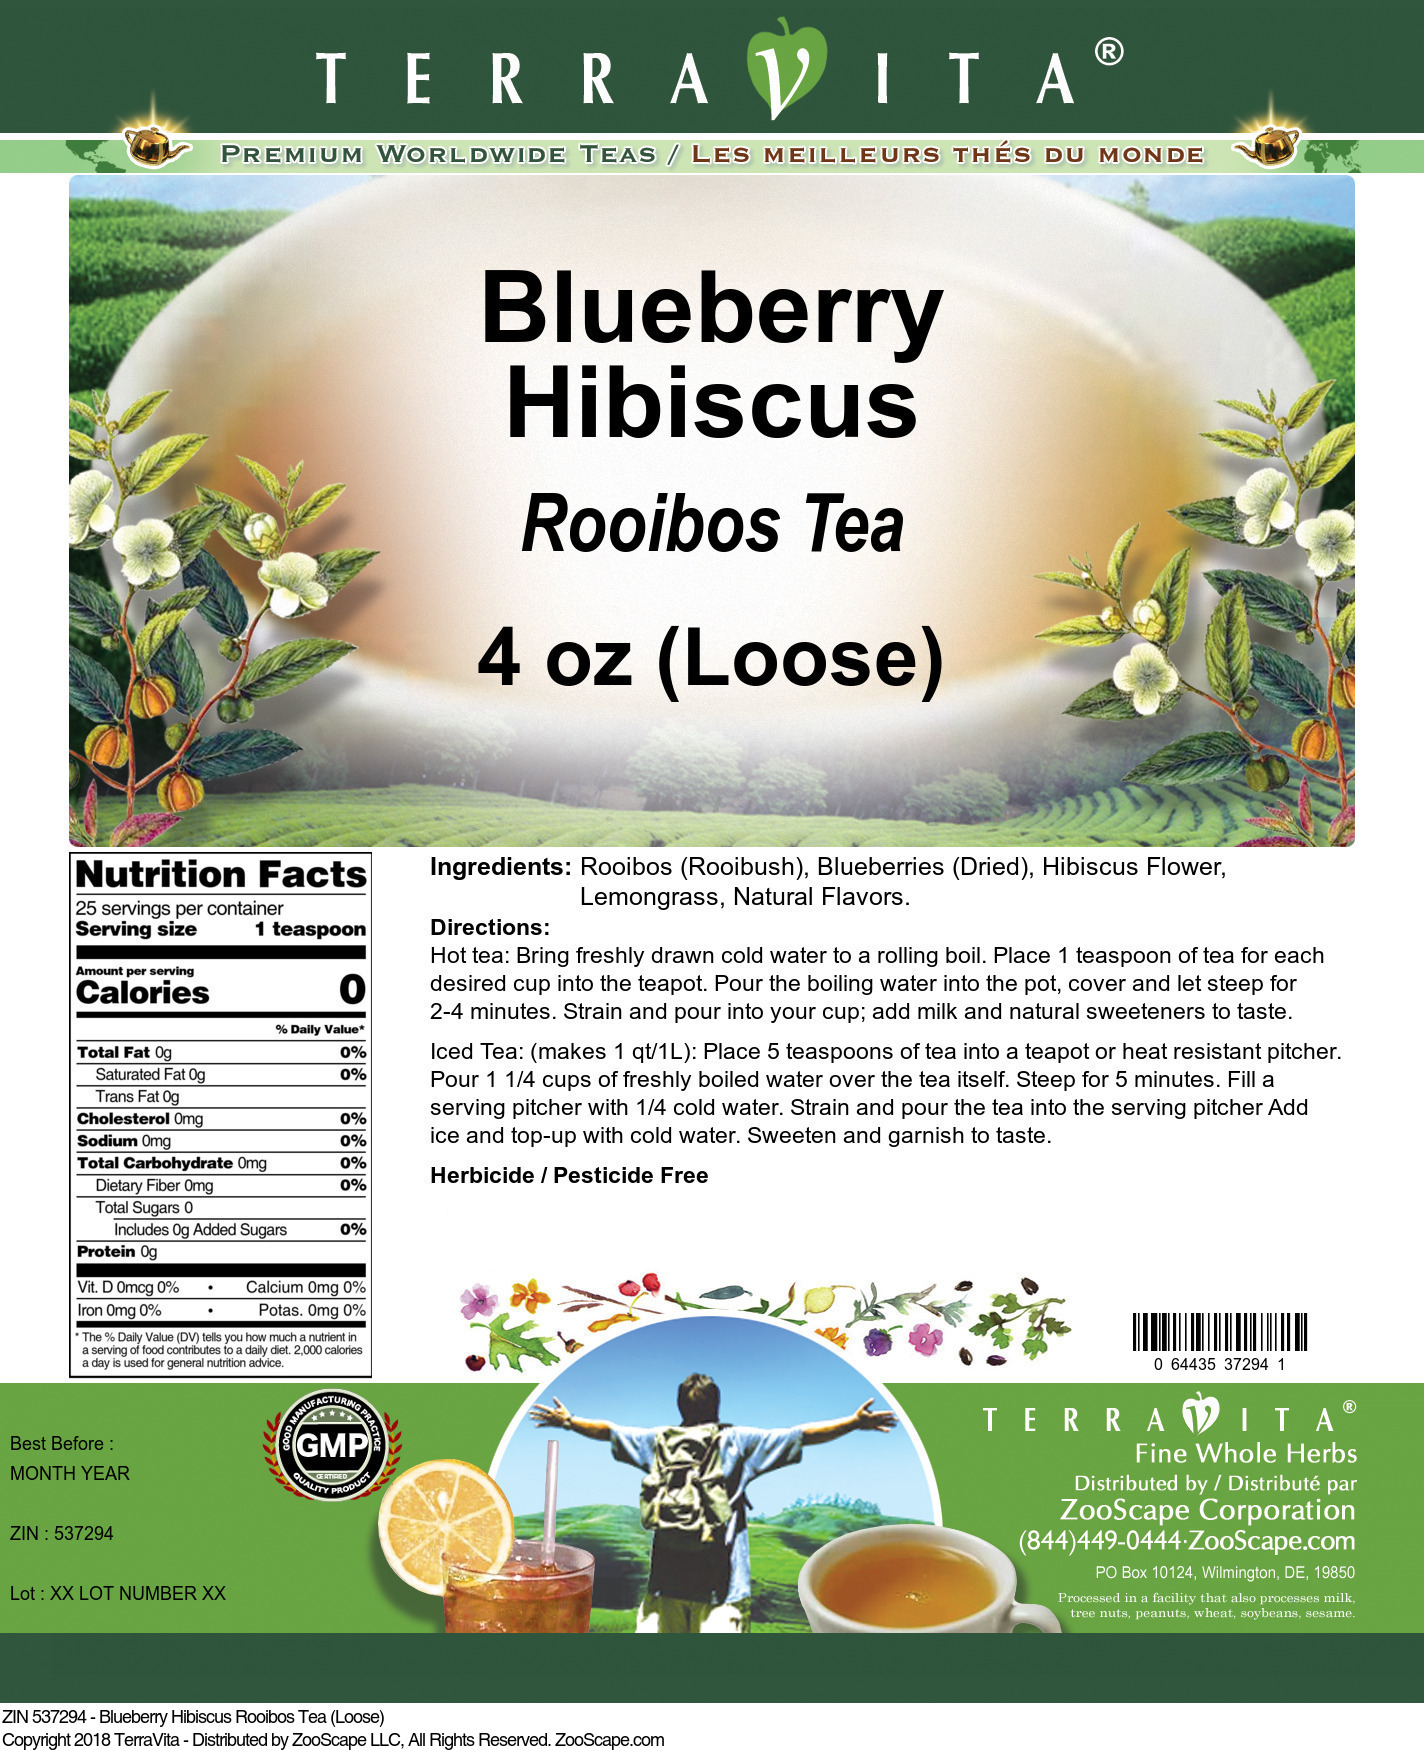 Blueberry Hibiscus Rooibos Tea (Loose) - Label